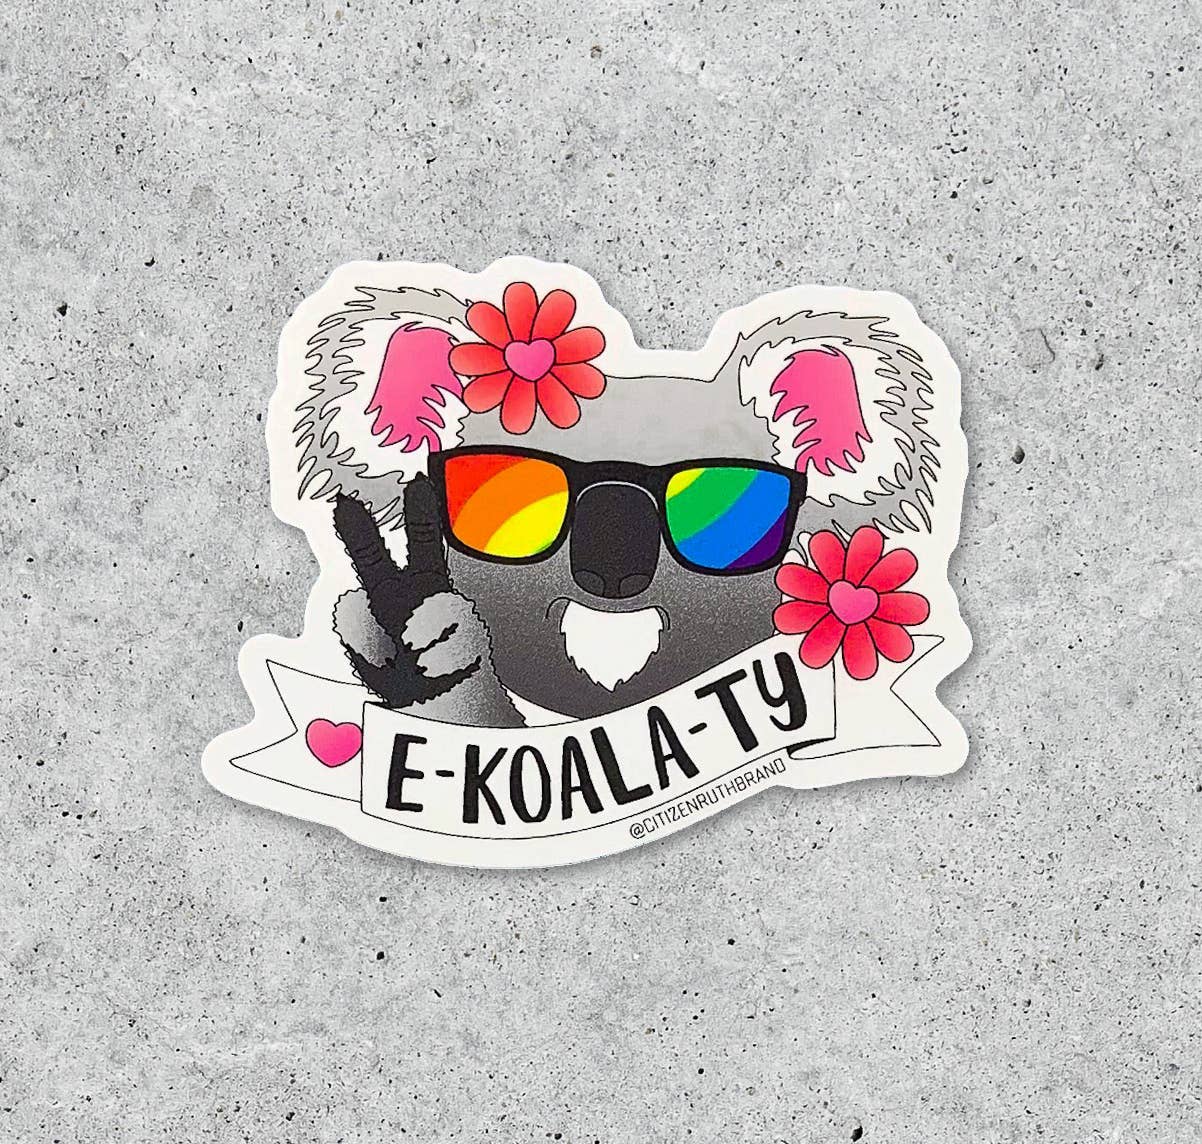 Koala bear sticker with rainbow sunglasses and making peace sign that reads E - Koala - Ty by Citizen Ruth